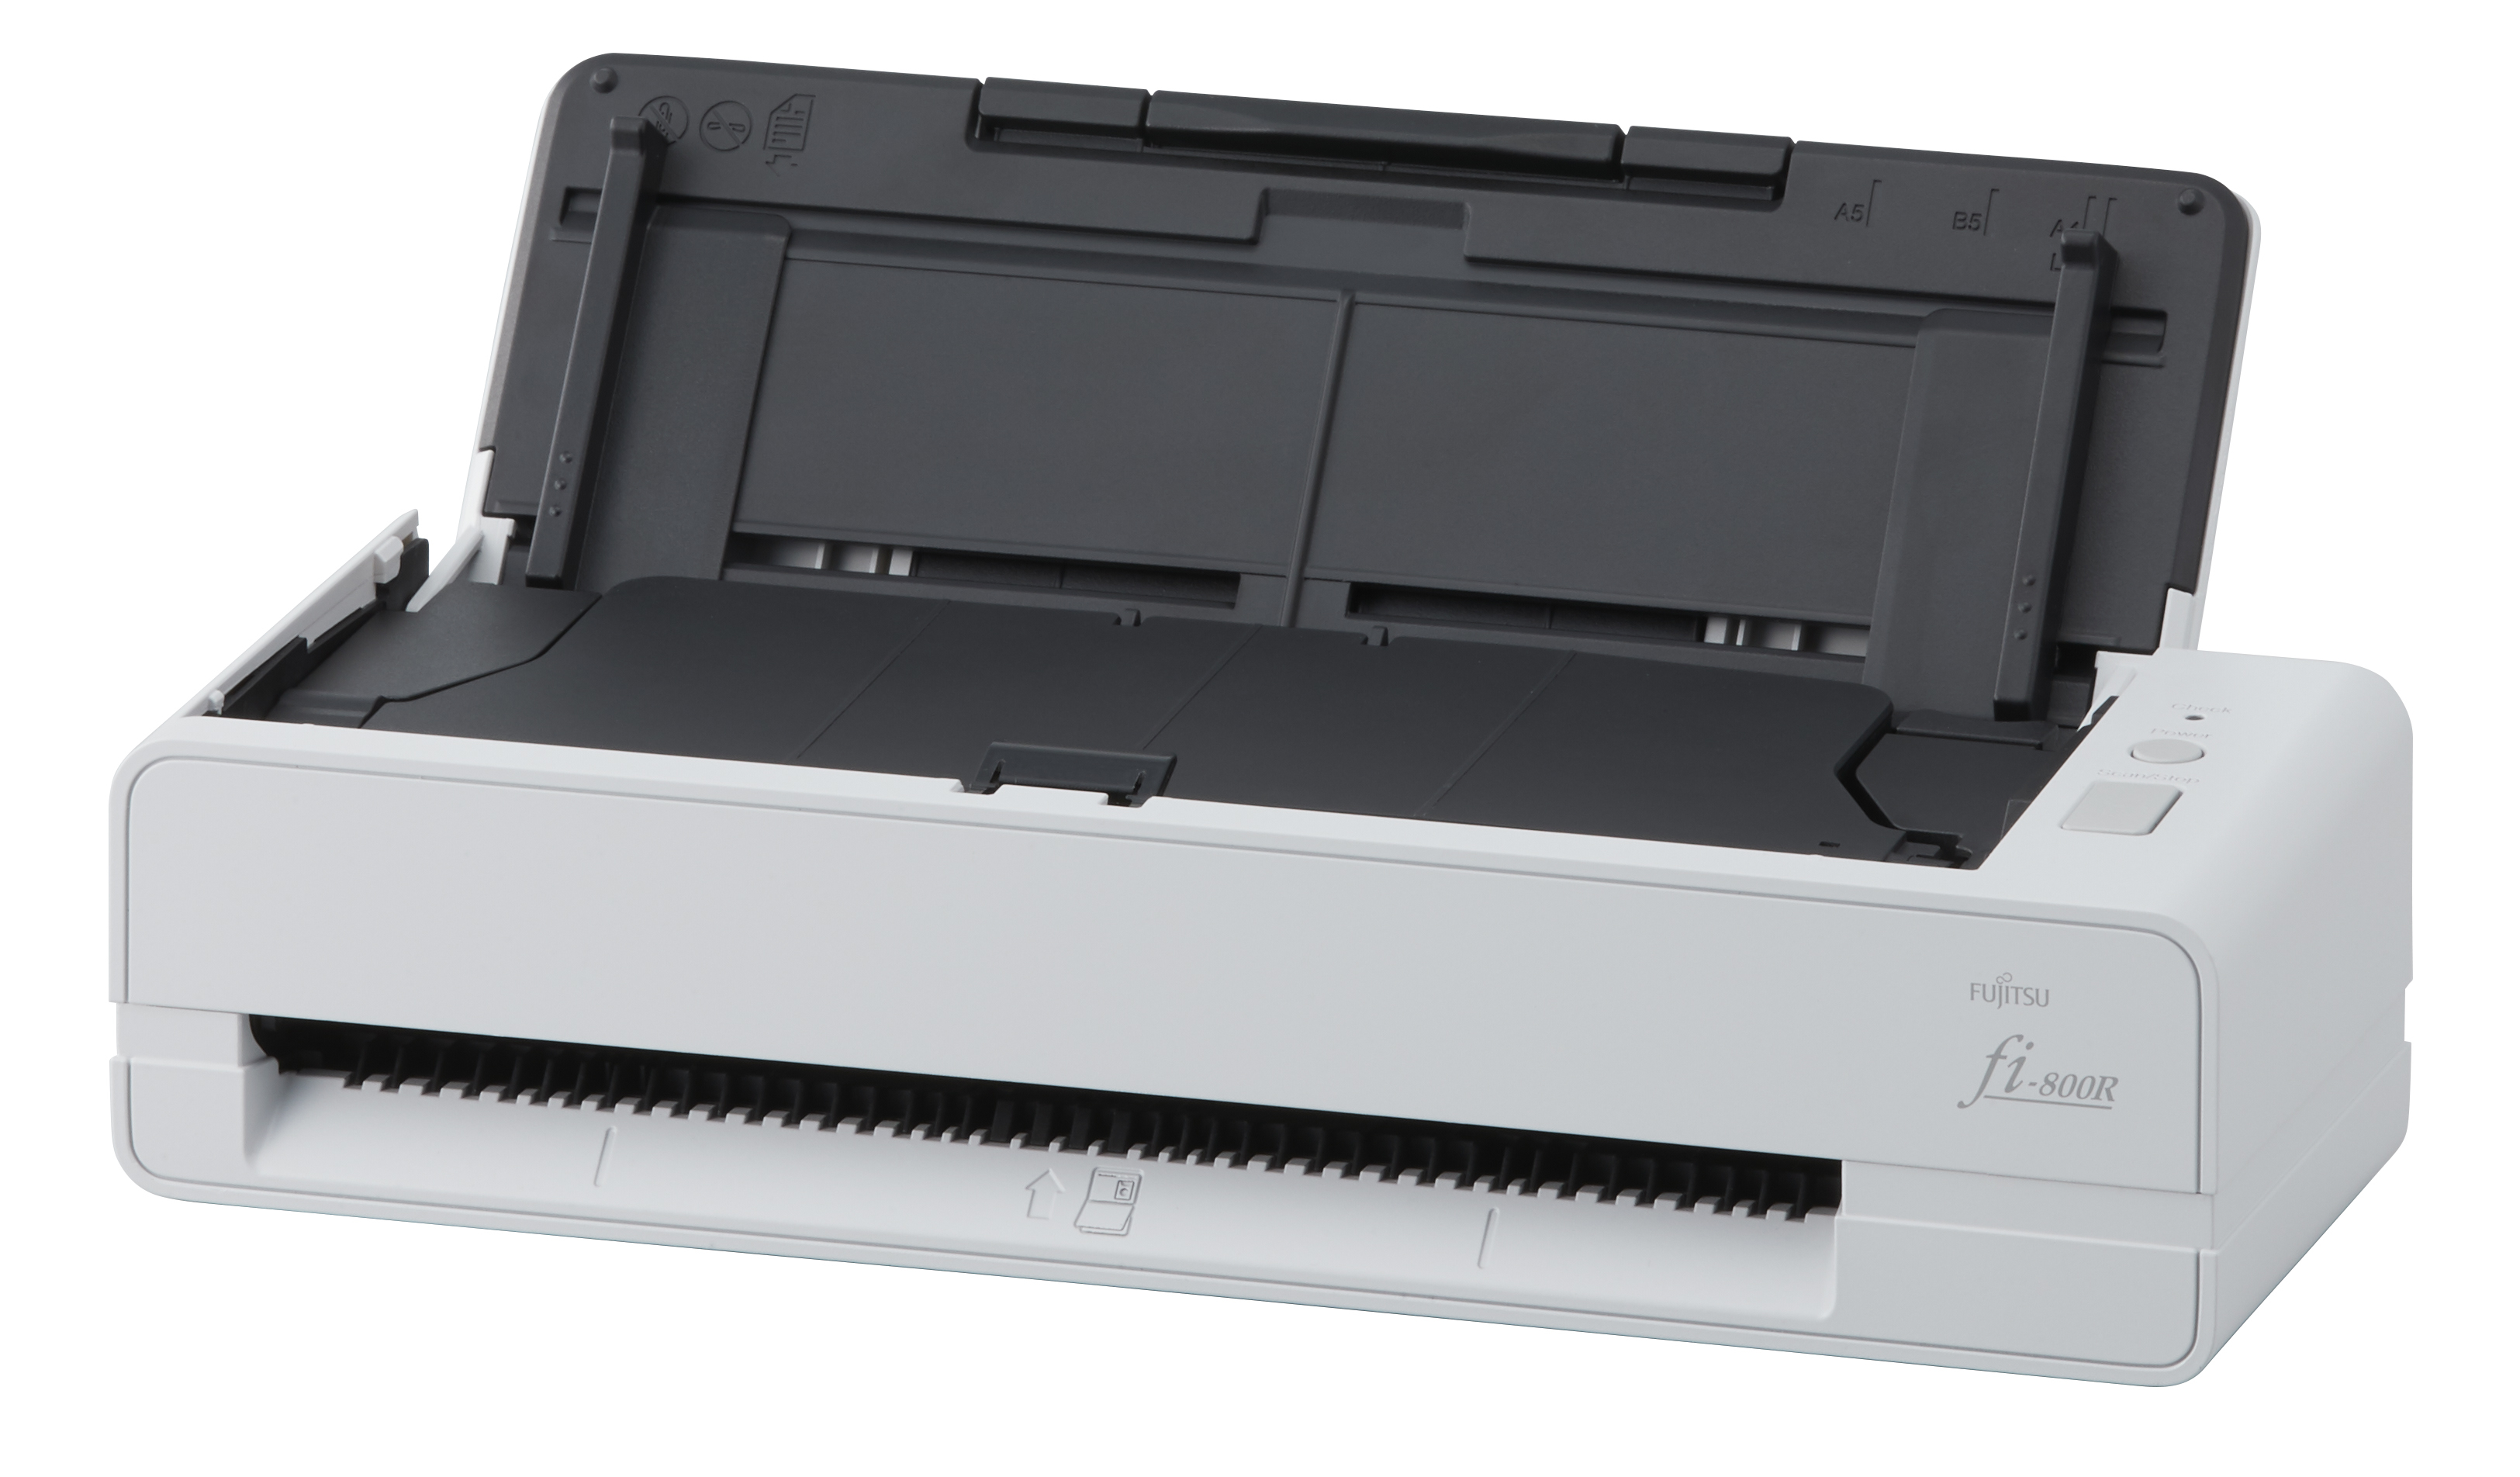 Fujitsu Ricoh fi 800R - Dokumentenscanner - Dual CIS - Duplex - A4 - 600 dpi x 600 dpi - bis zu 40 Seiten/Min. (einfarbig)